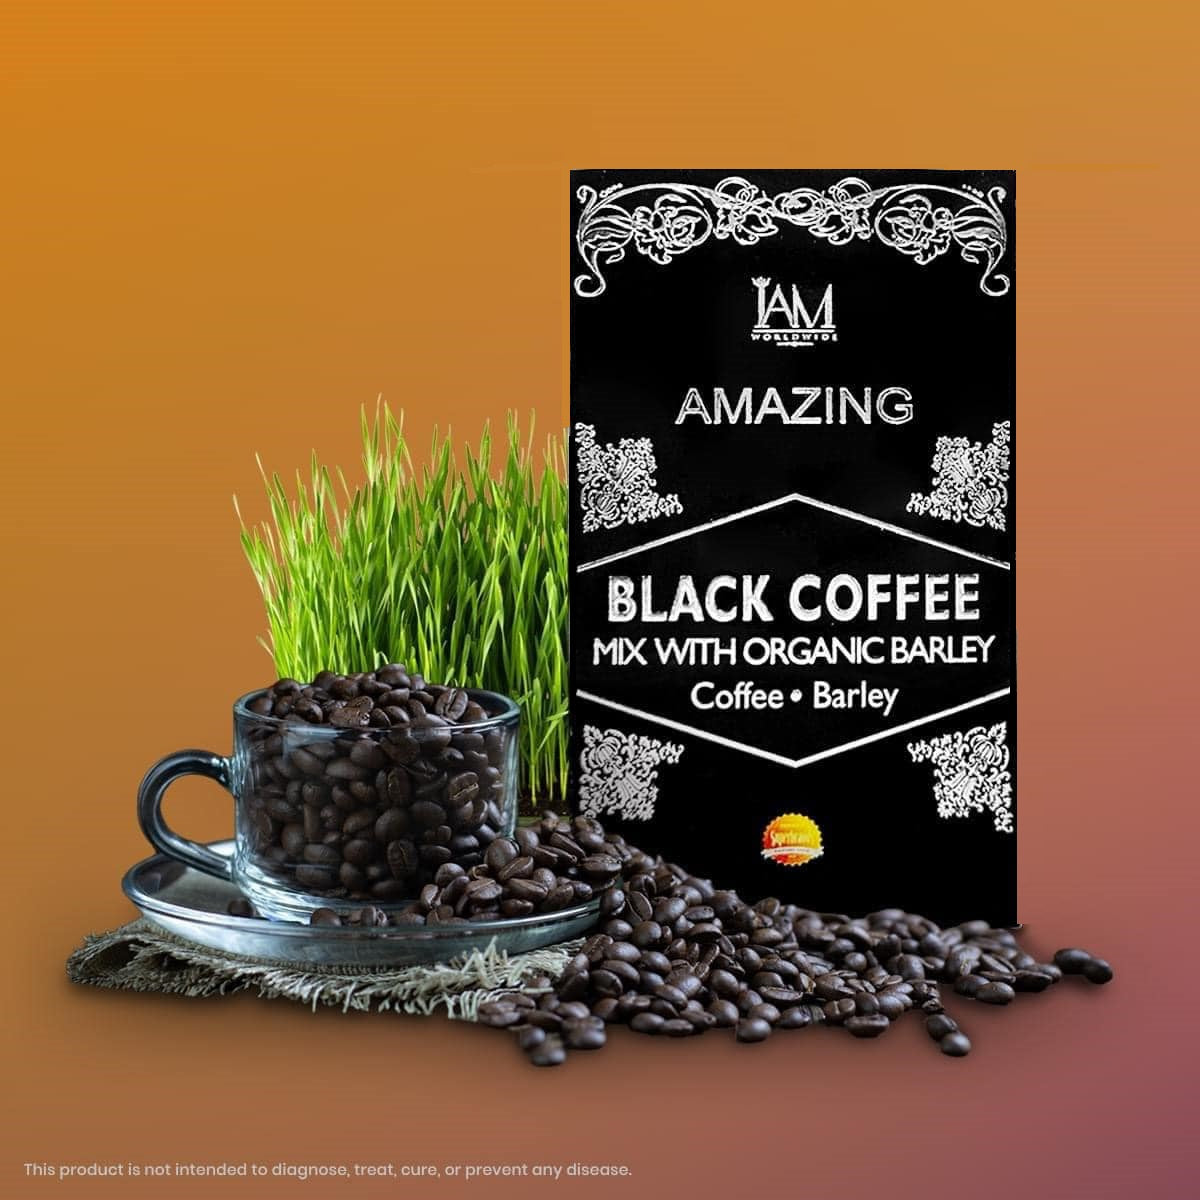 Amazing Black Coffee Mix with Organic Barley (1 Box) Organico